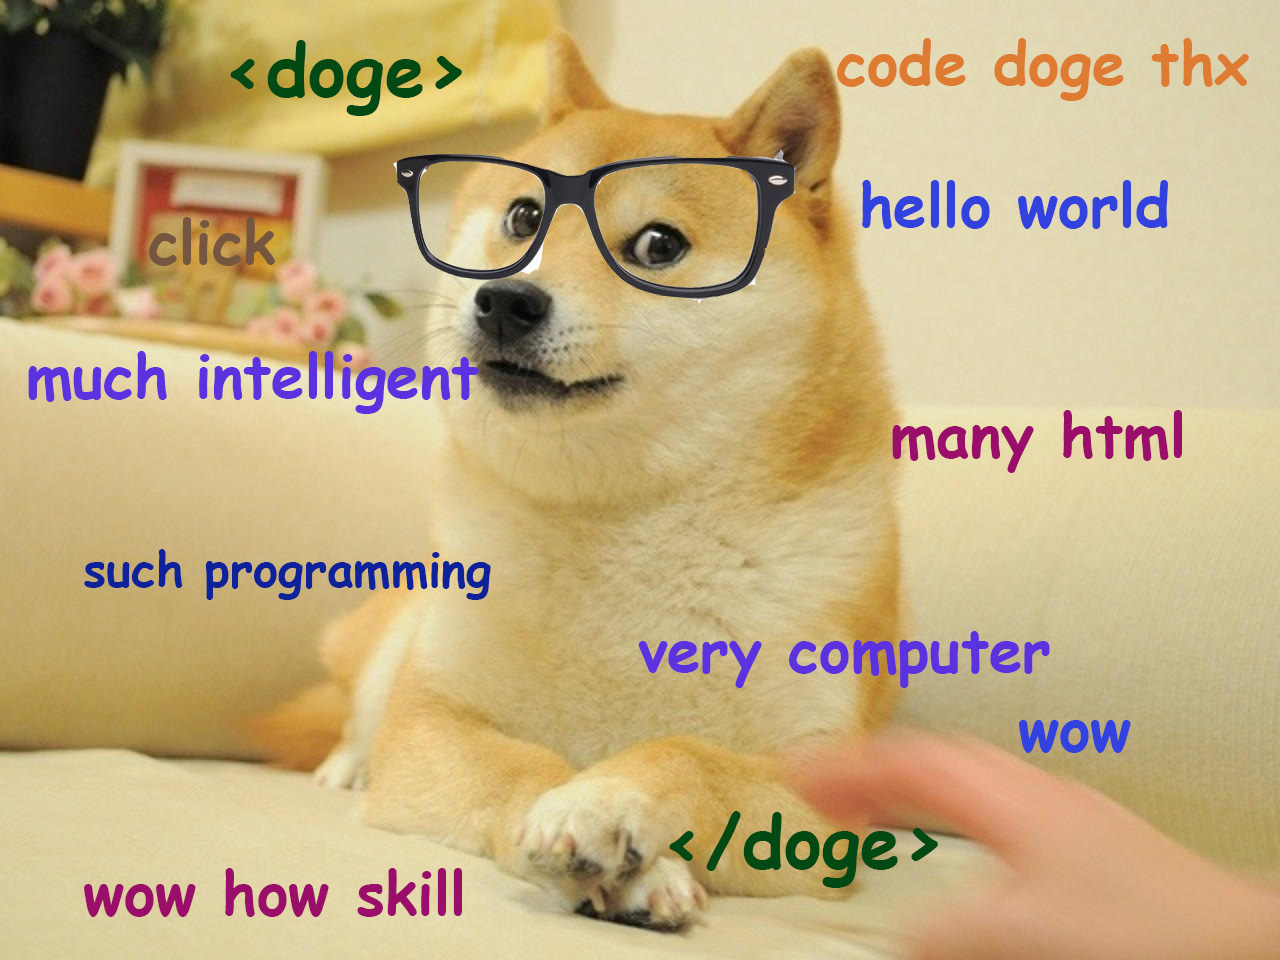 meme doge "such code", "many html"